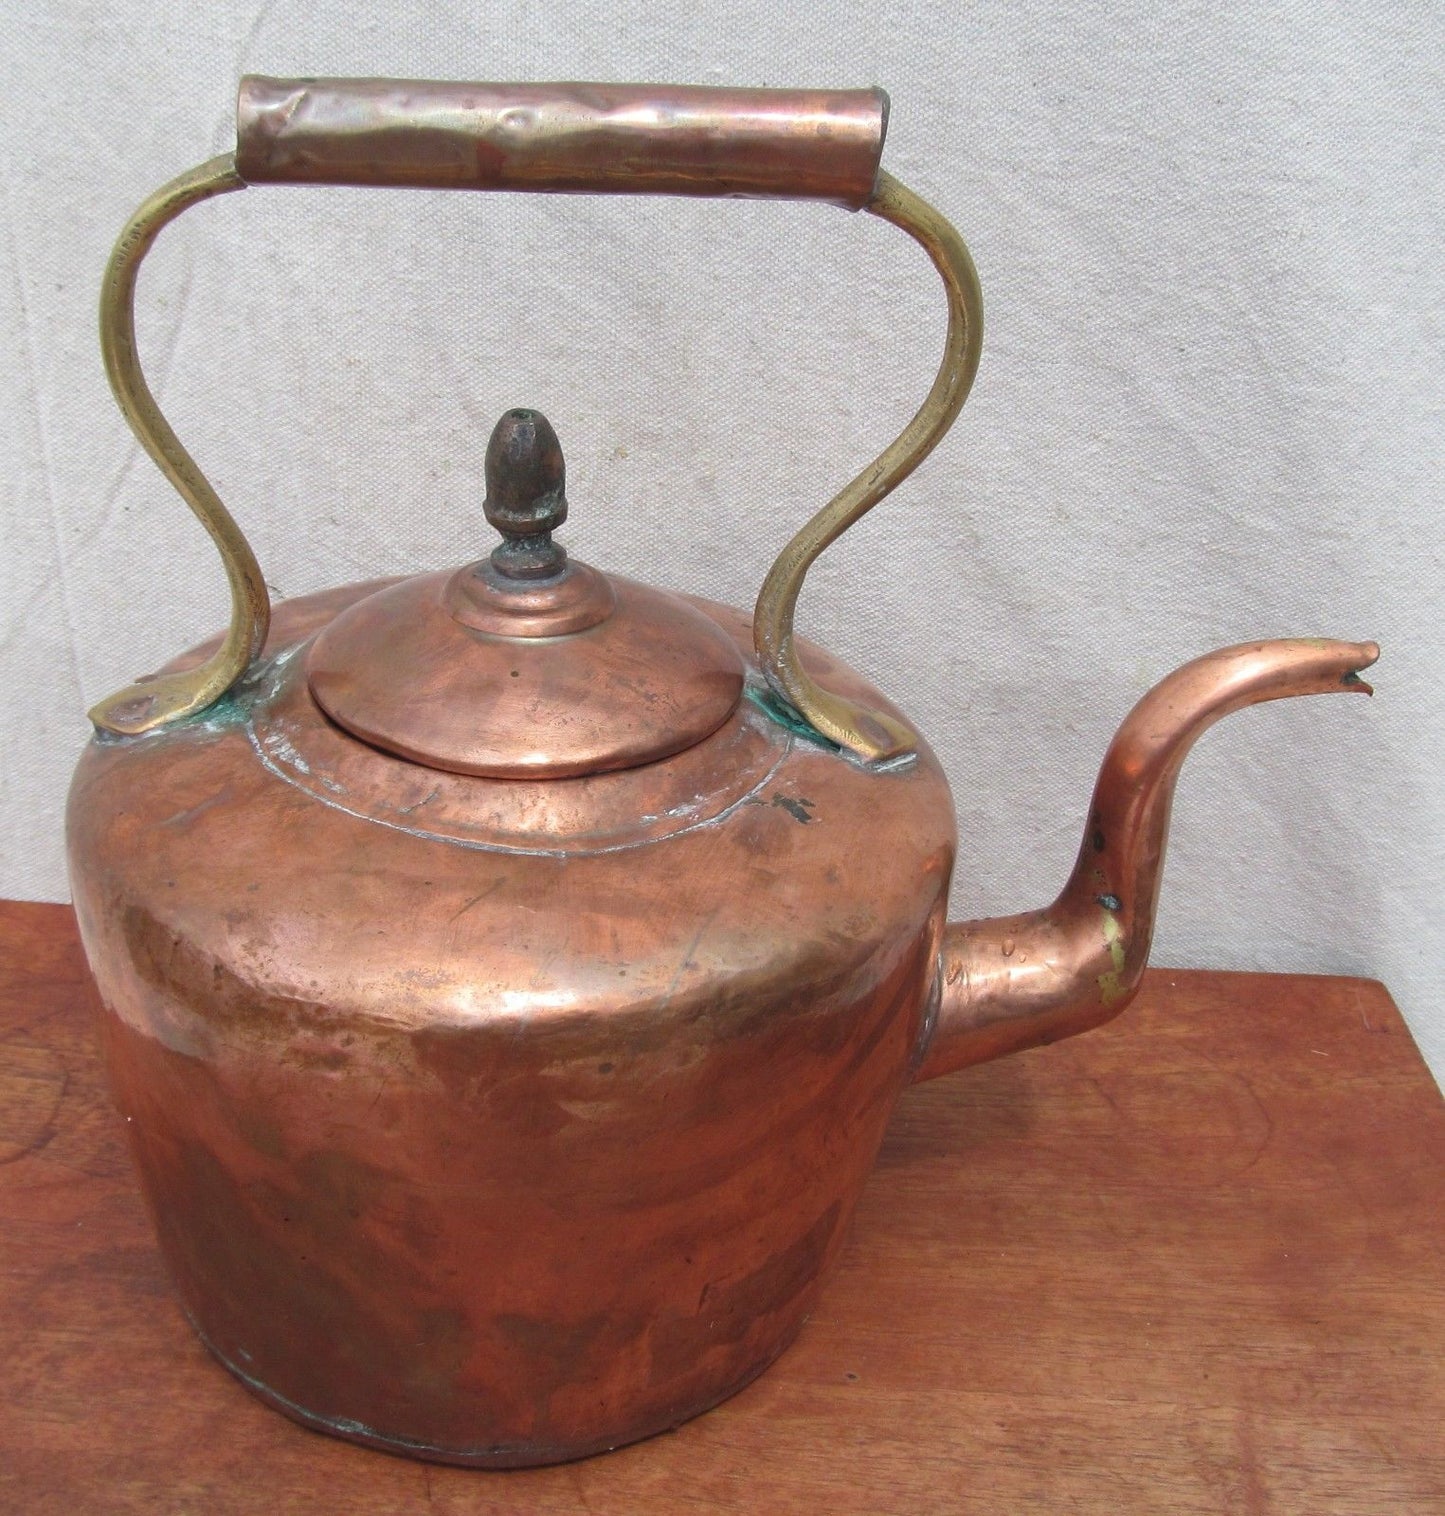 EARLY 19TH CENTURY COPPER TEA KETTLE